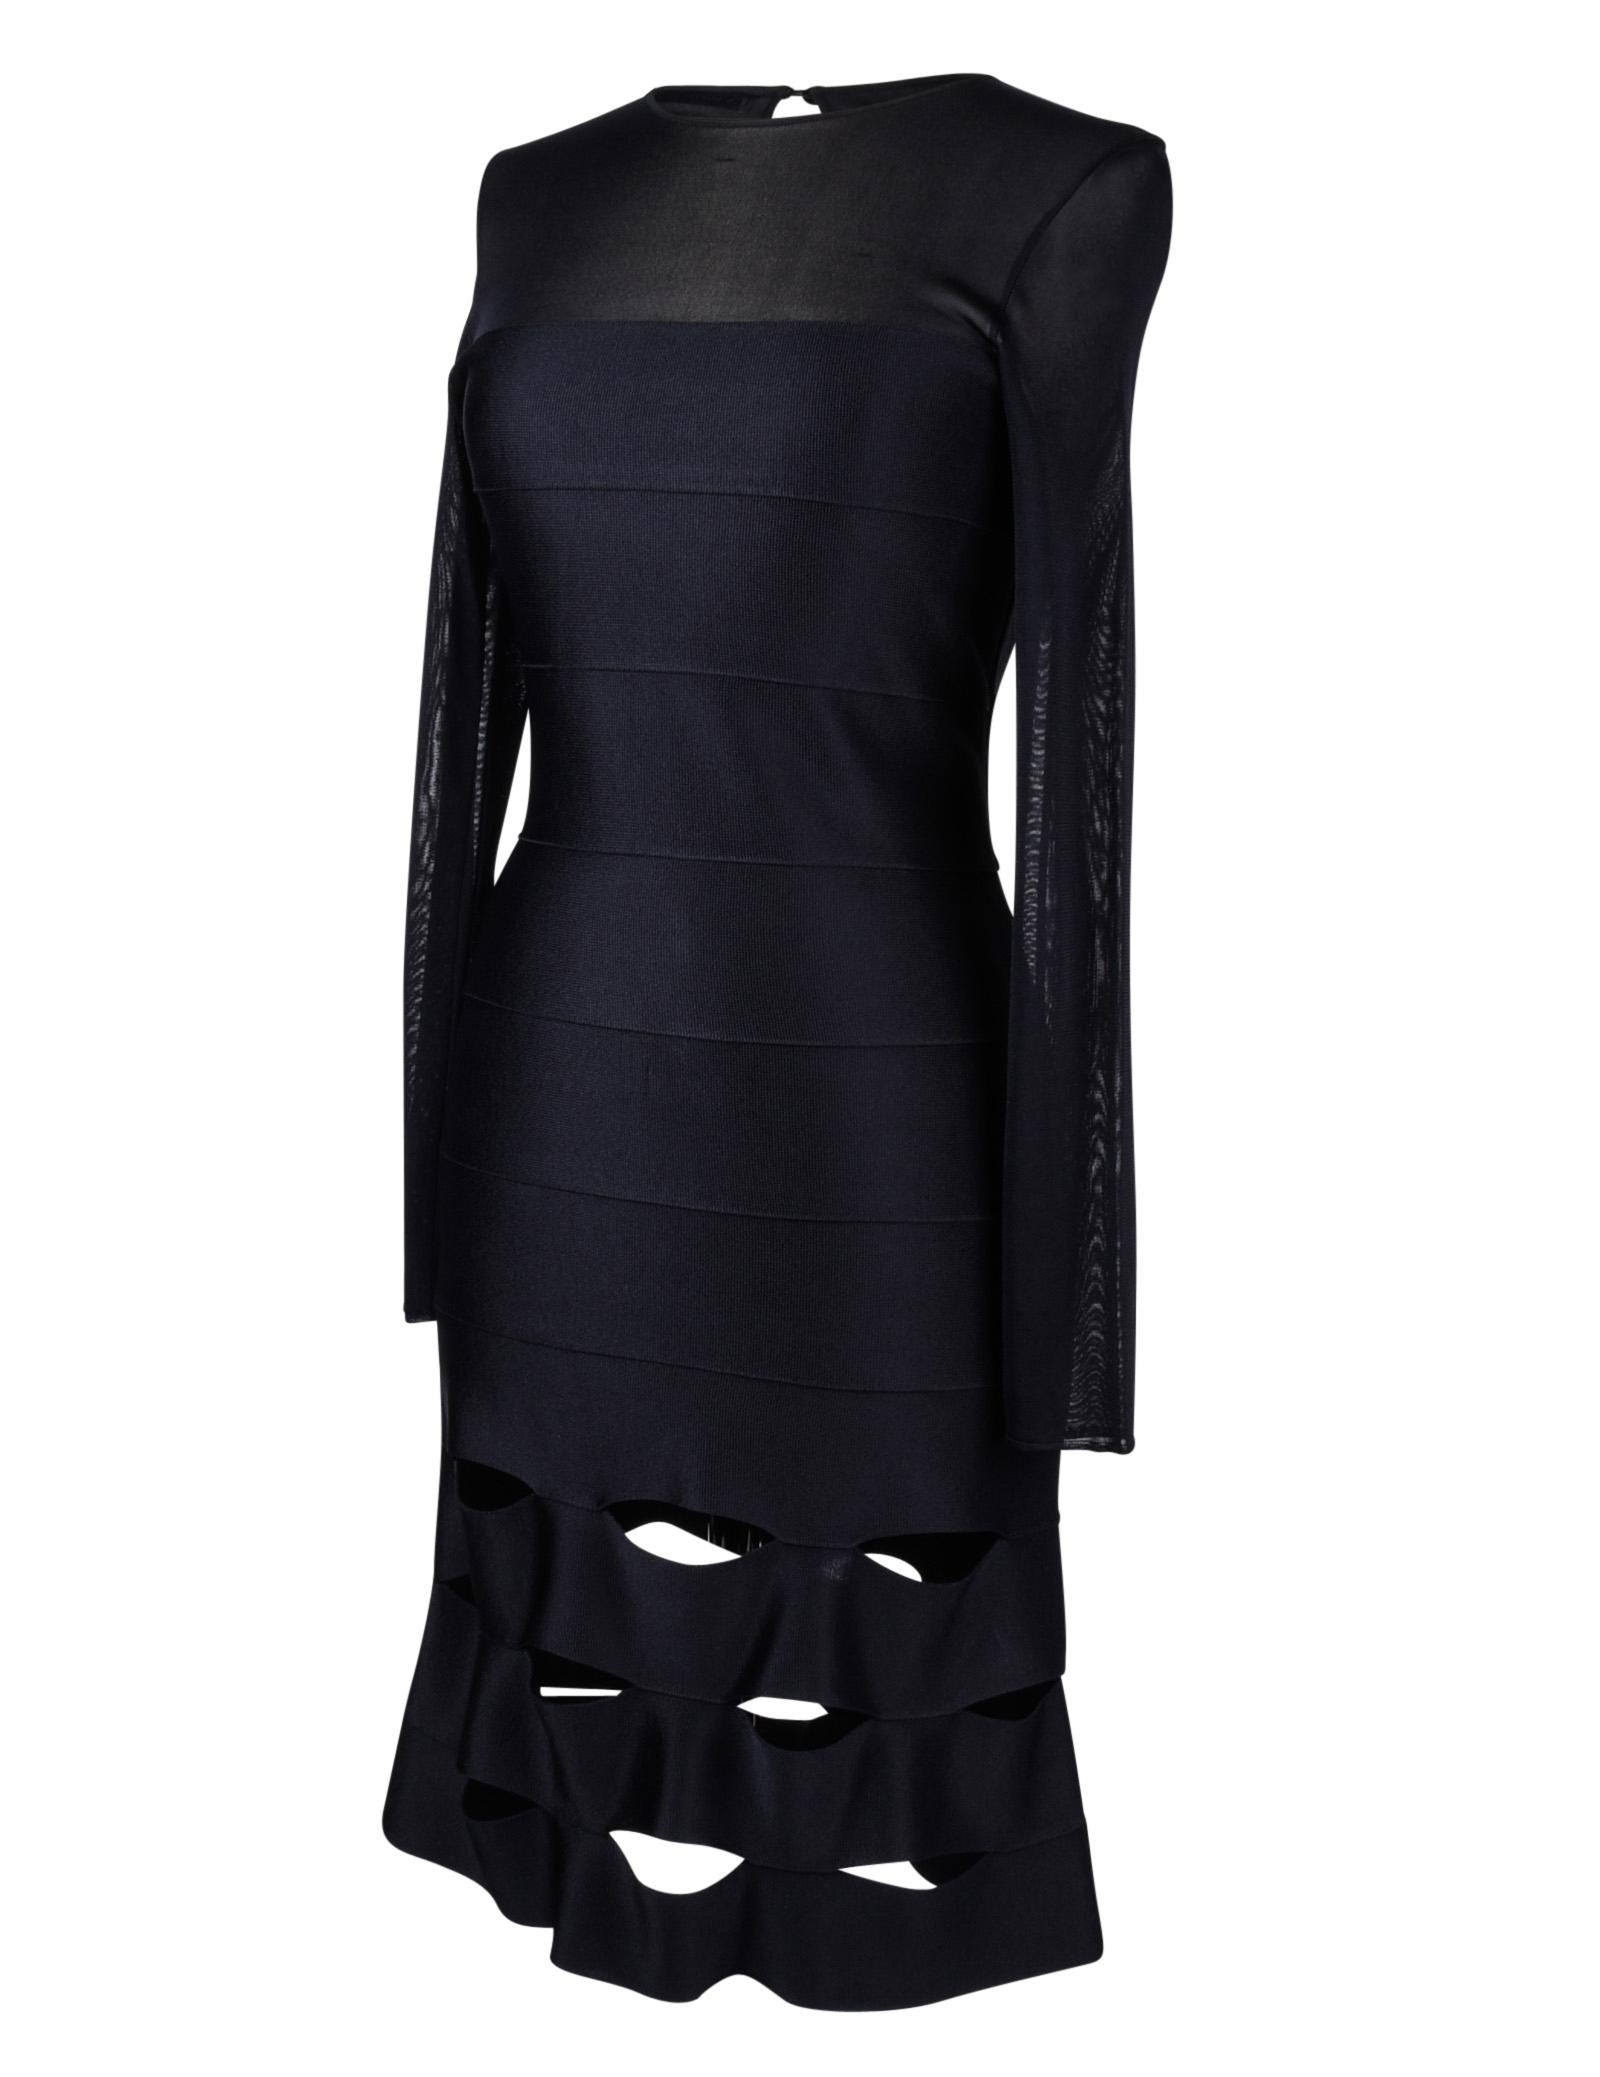 Women's Christian Dior Dress Black Bandage and Mesh 40 / 8